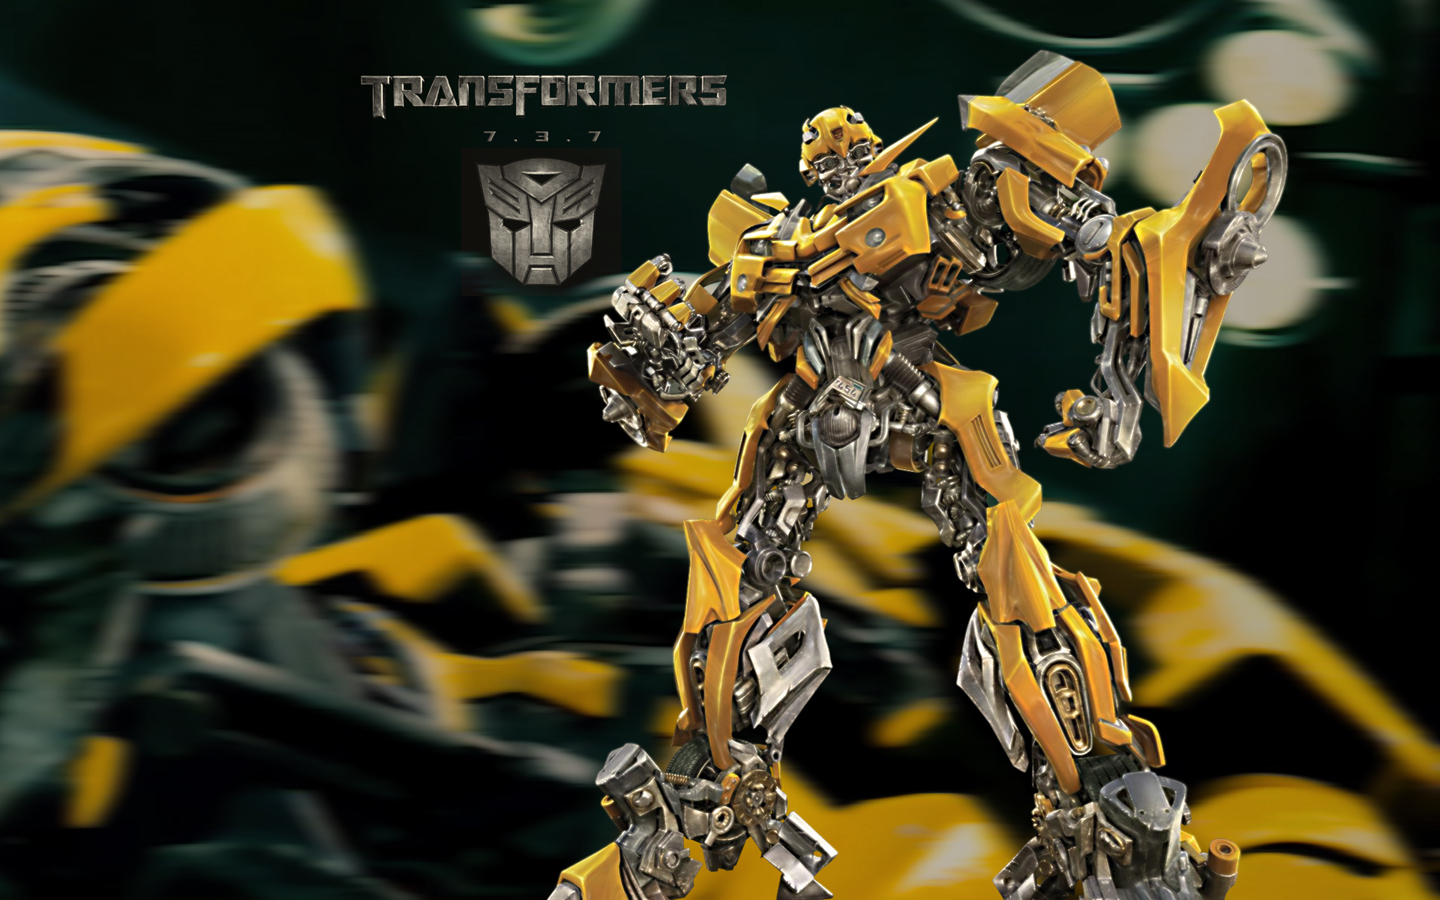 Transformers HD Wallpaper | Slwallpapers